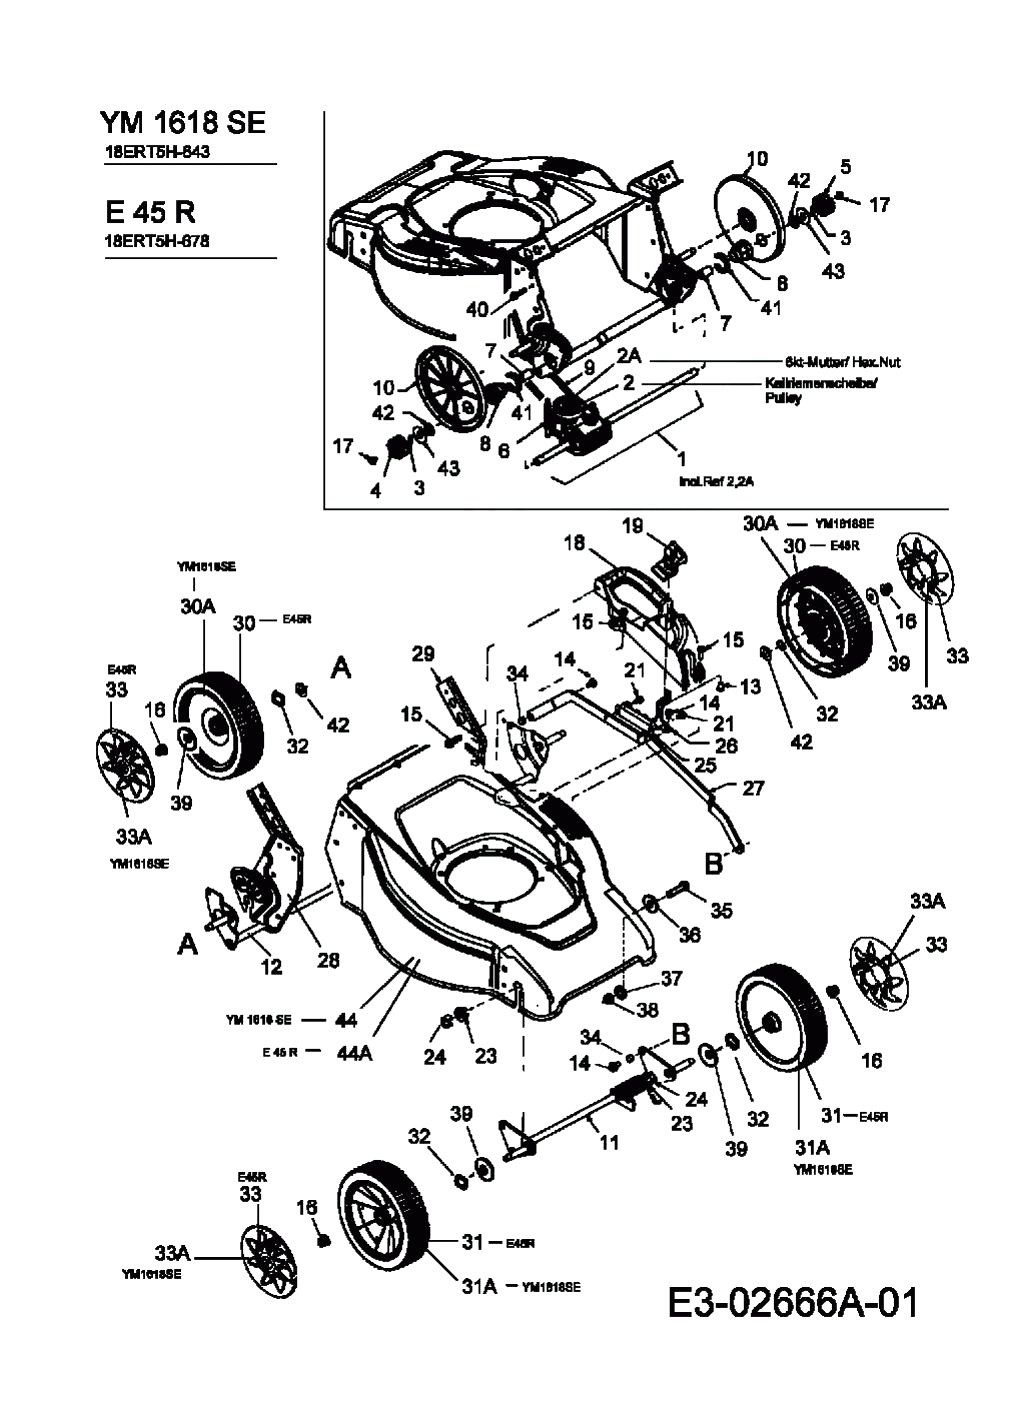 MTD Артикул 18ERT5H-678 (год выпуска 2006). Коробка передач, колеса, регулятор высоты